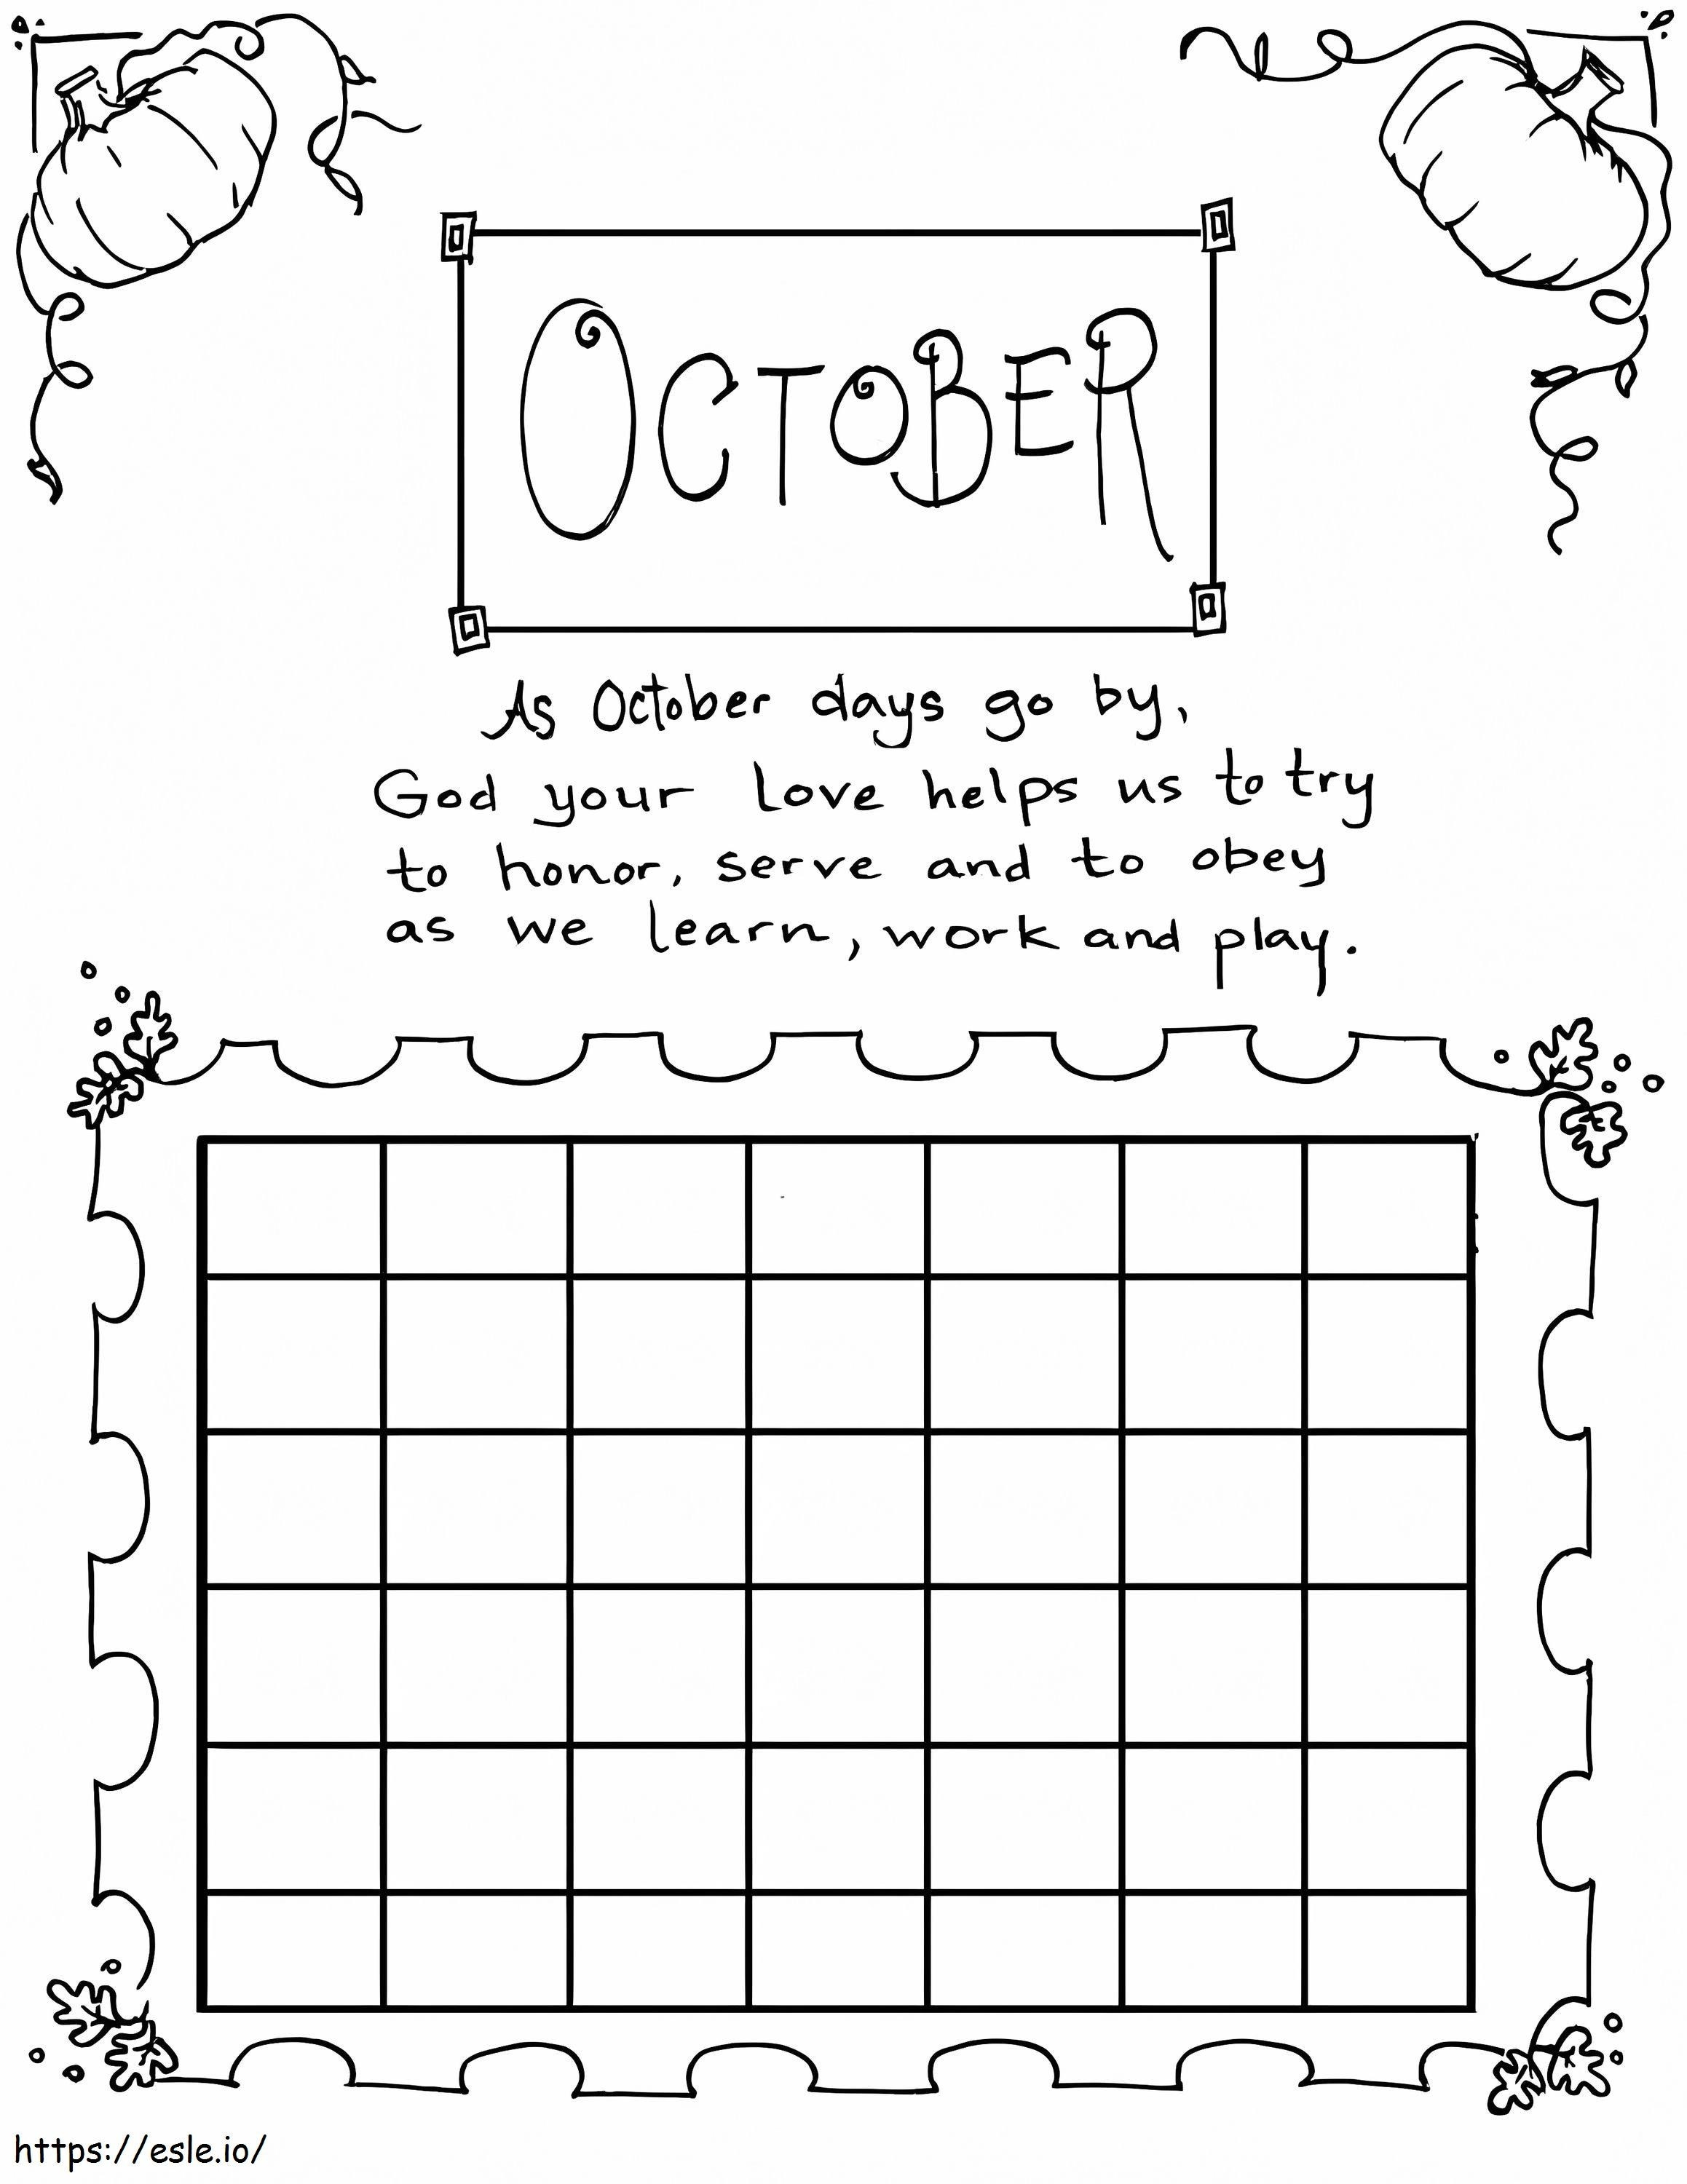 October Calendar coloring page